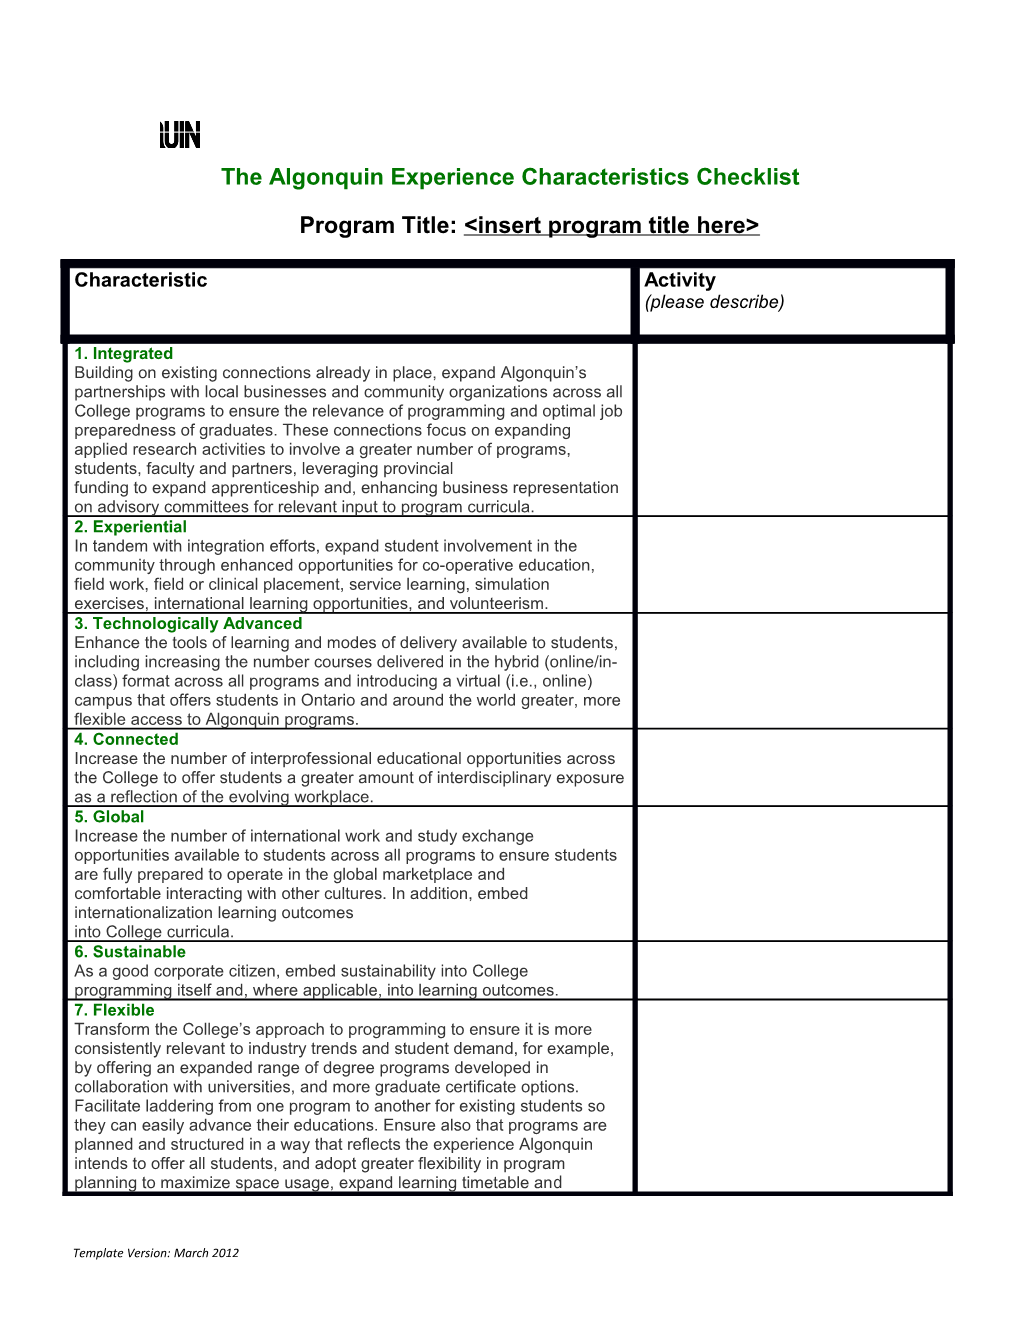 The Algonquin Experience Characteristics Checklist